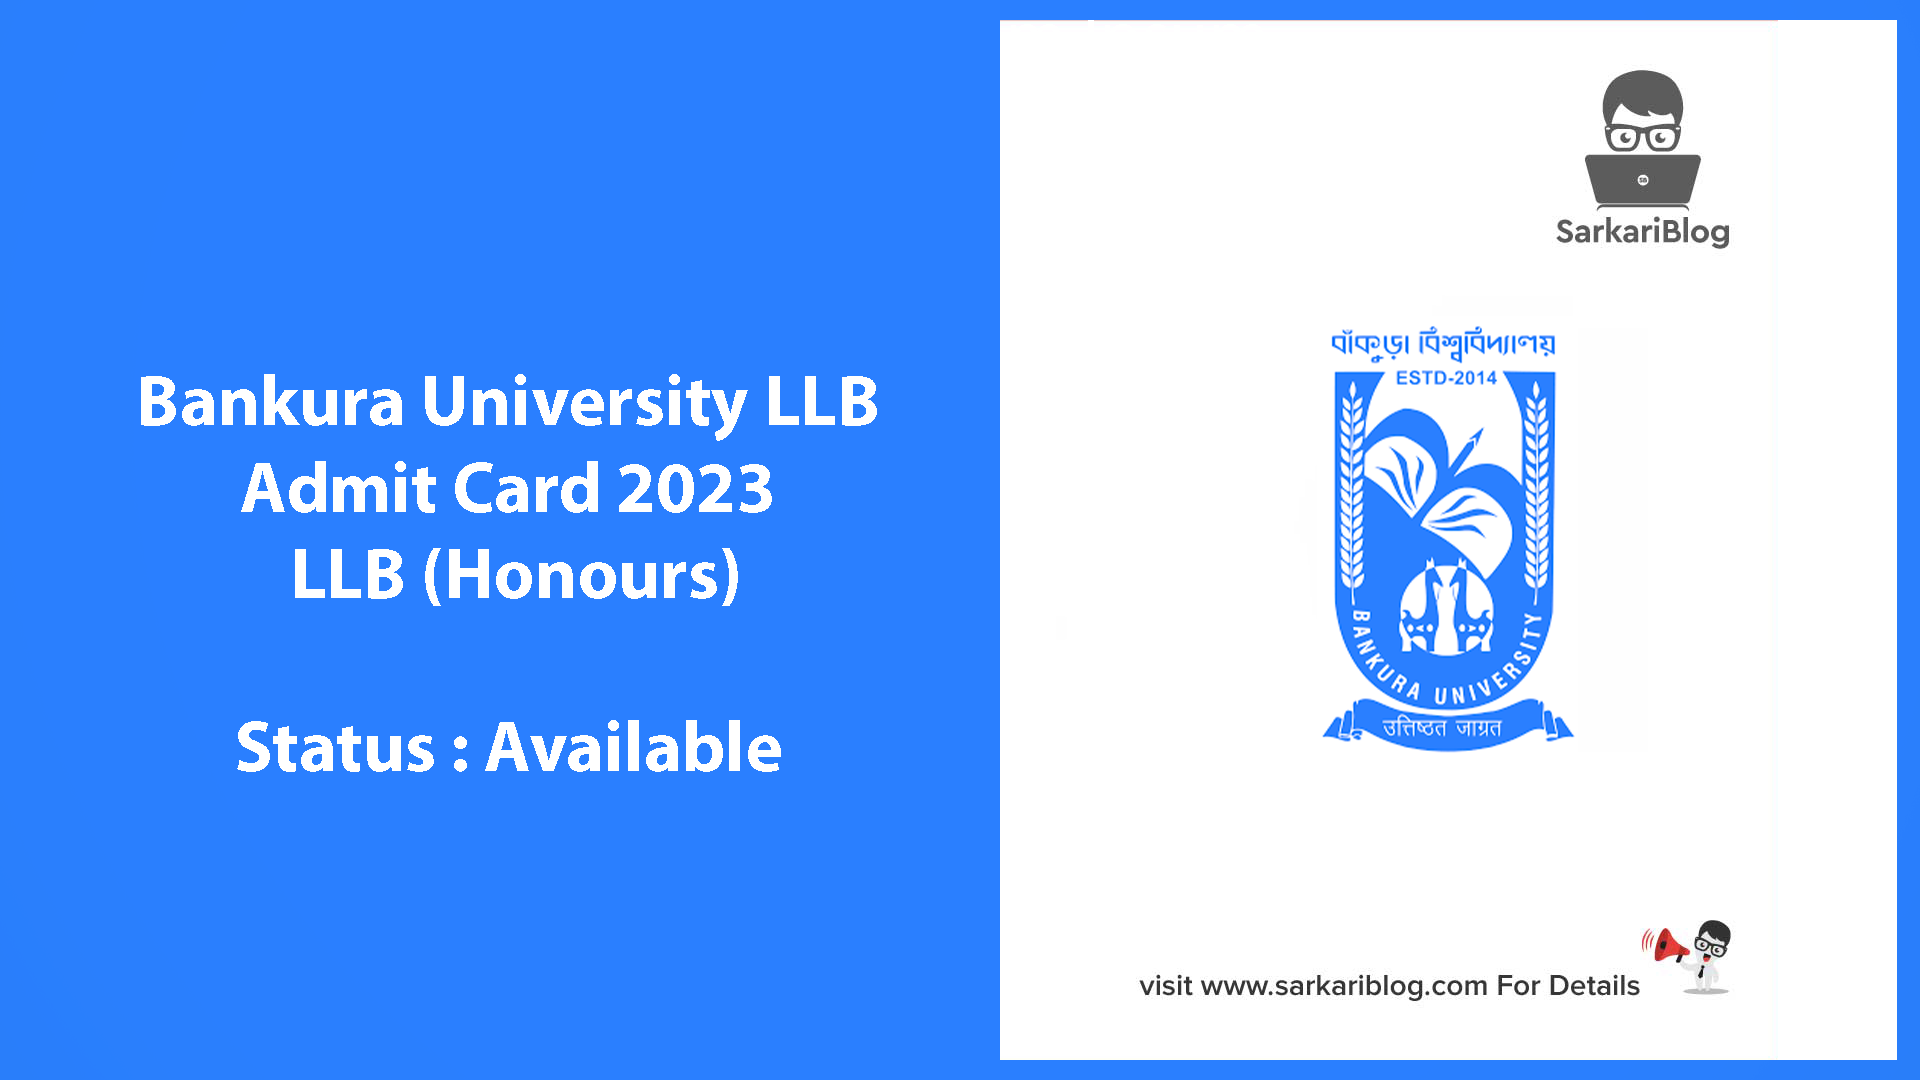 Bankura University LLB Admit Card 2023